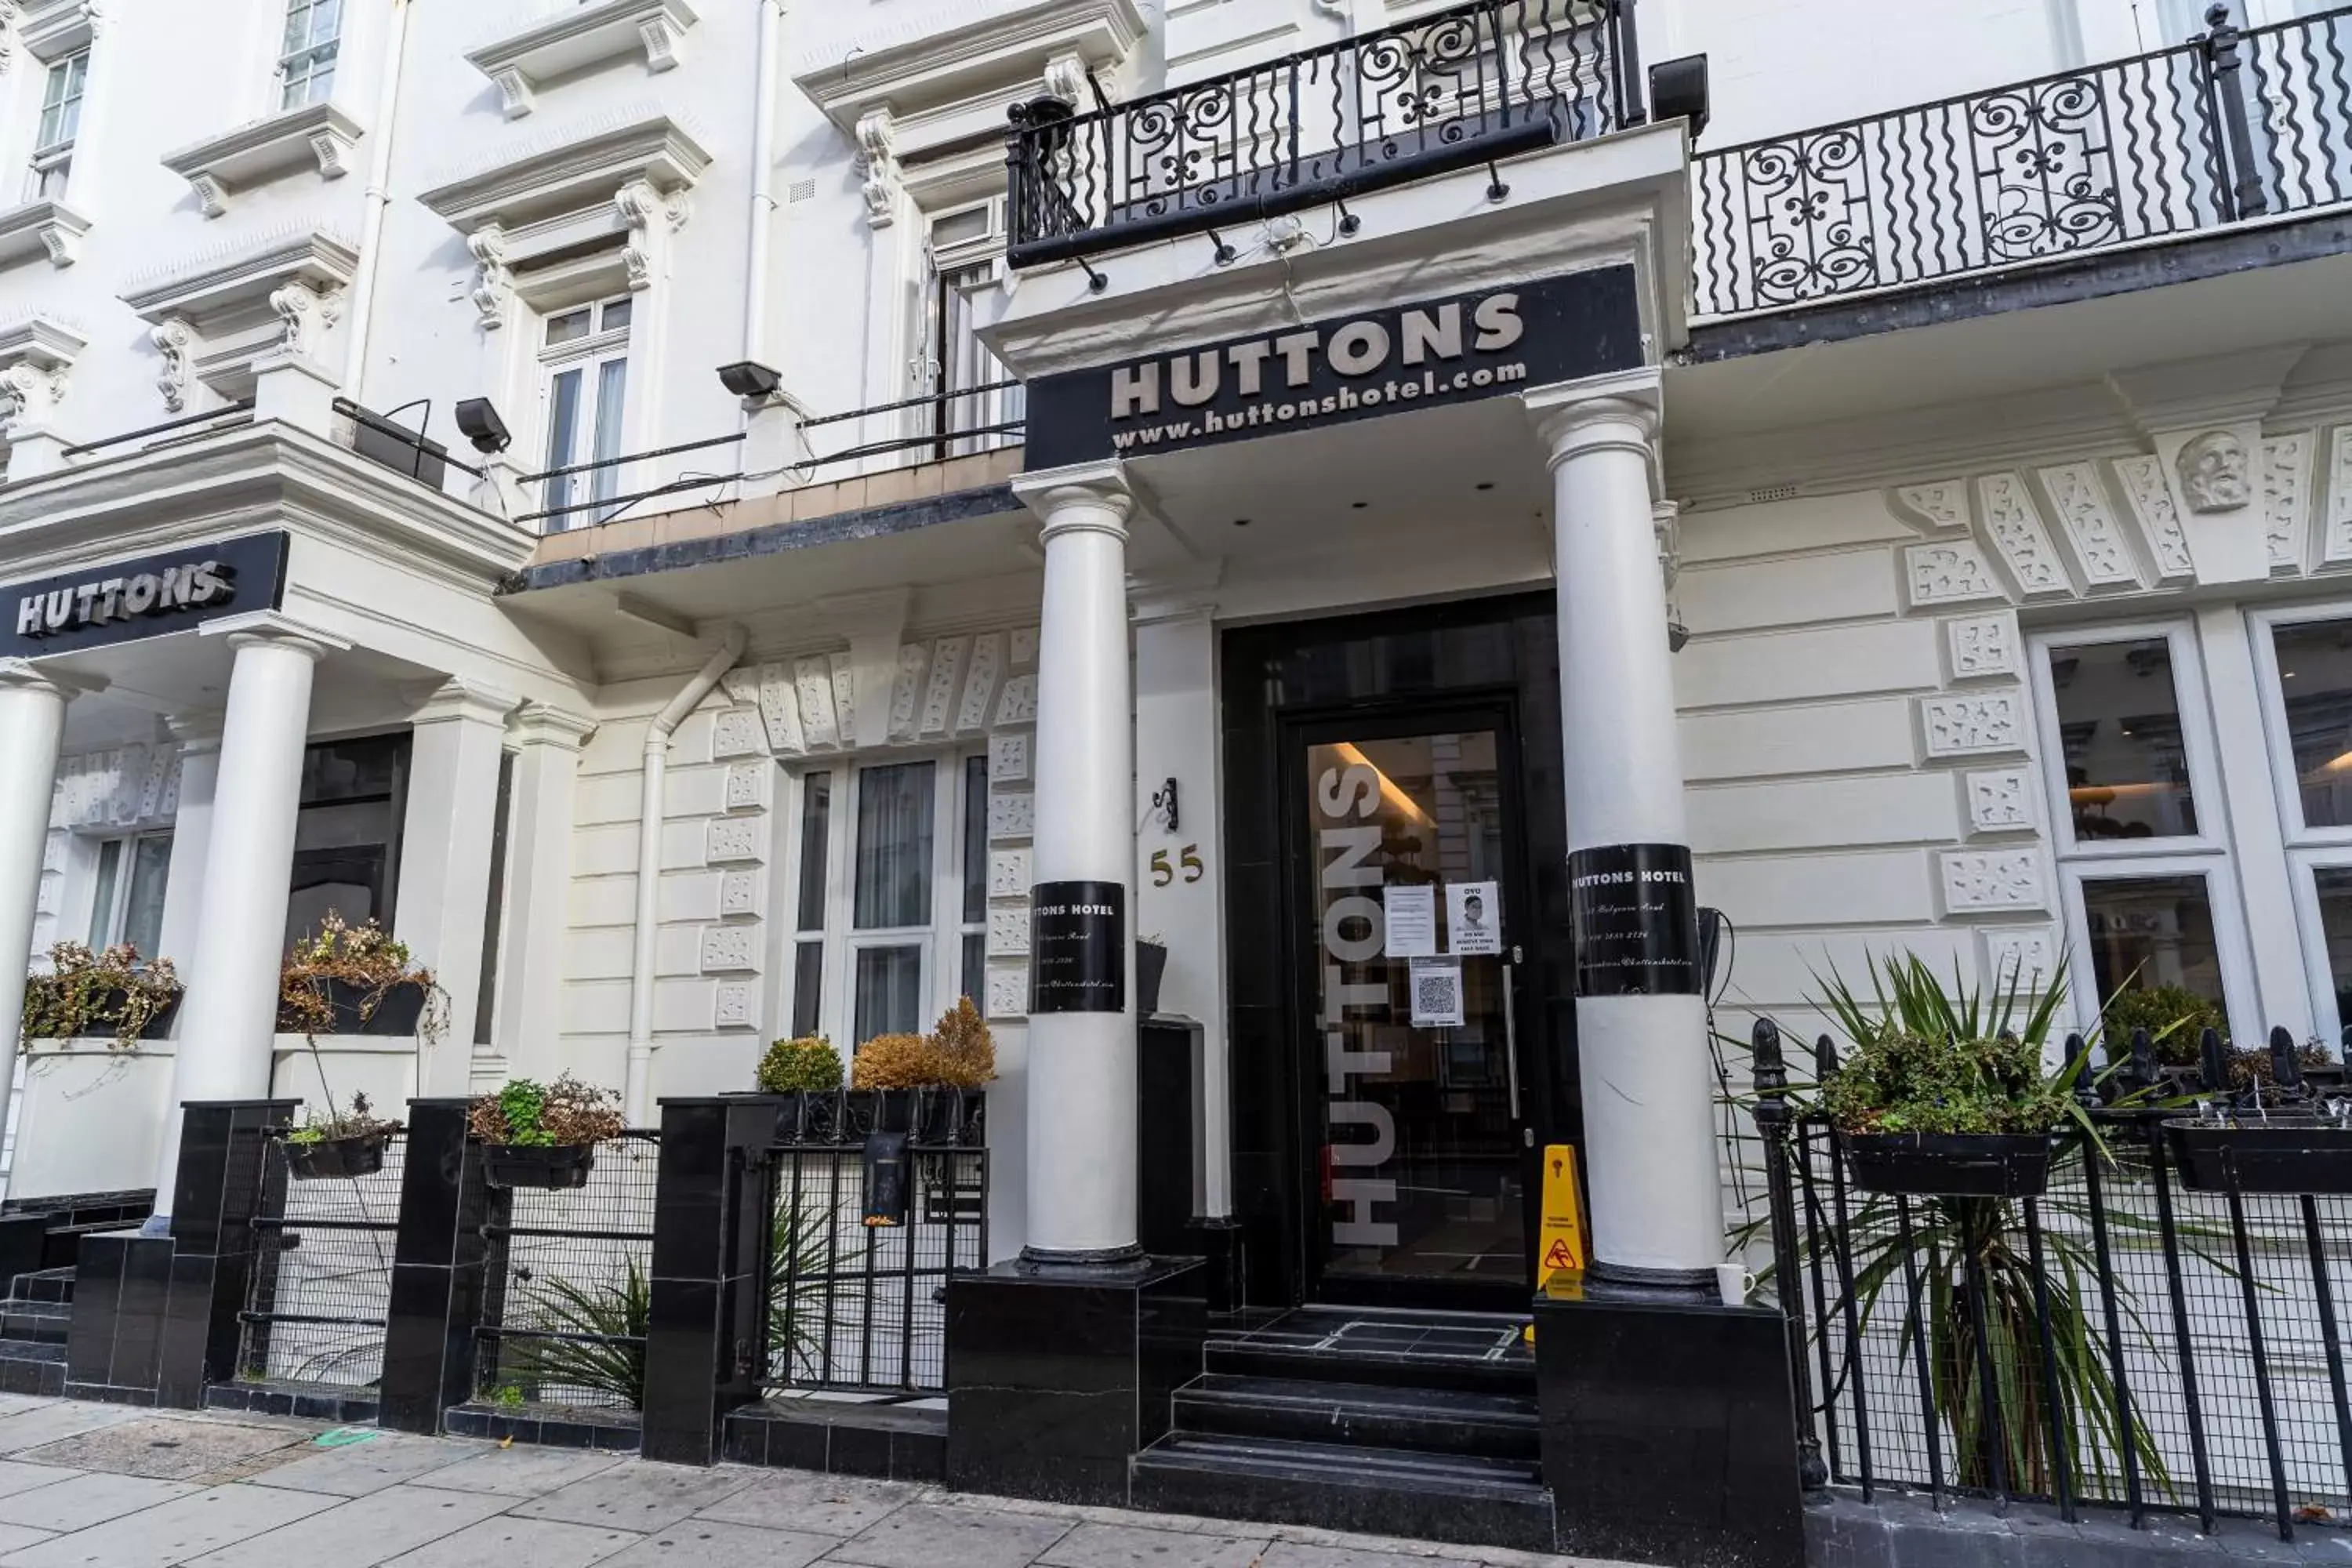 Facade/entrance in Huttons Hotel, Victoria London